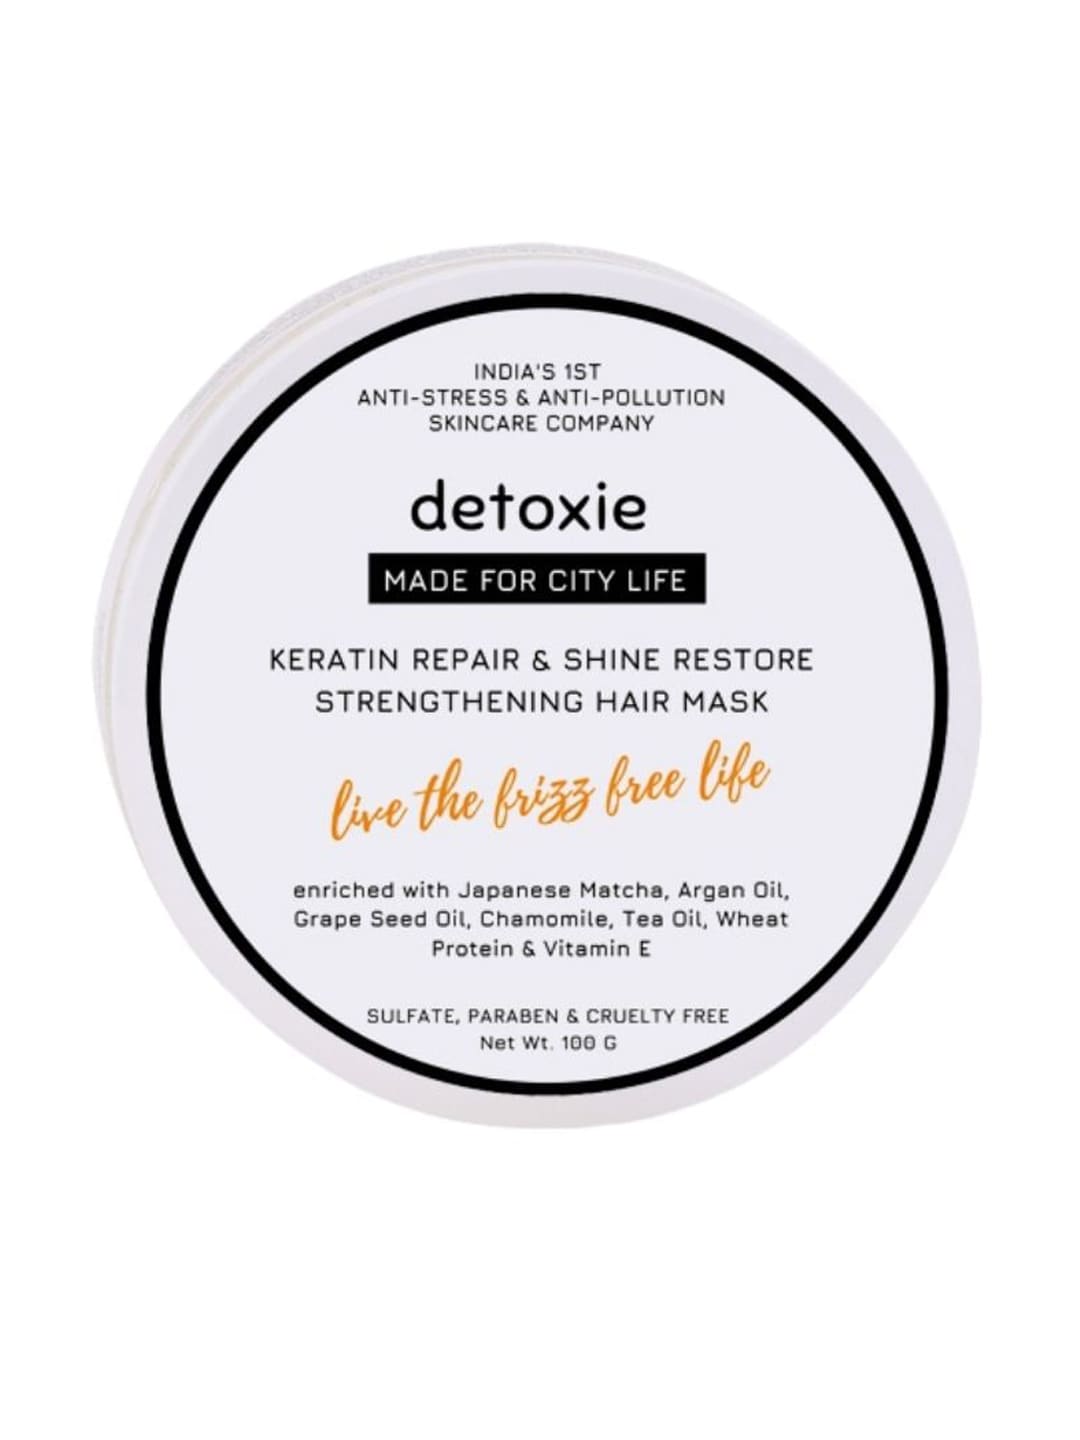 Detoxie Keratin Repair & Shine Restore Strengthening Hair Mask - 100 g Price in India